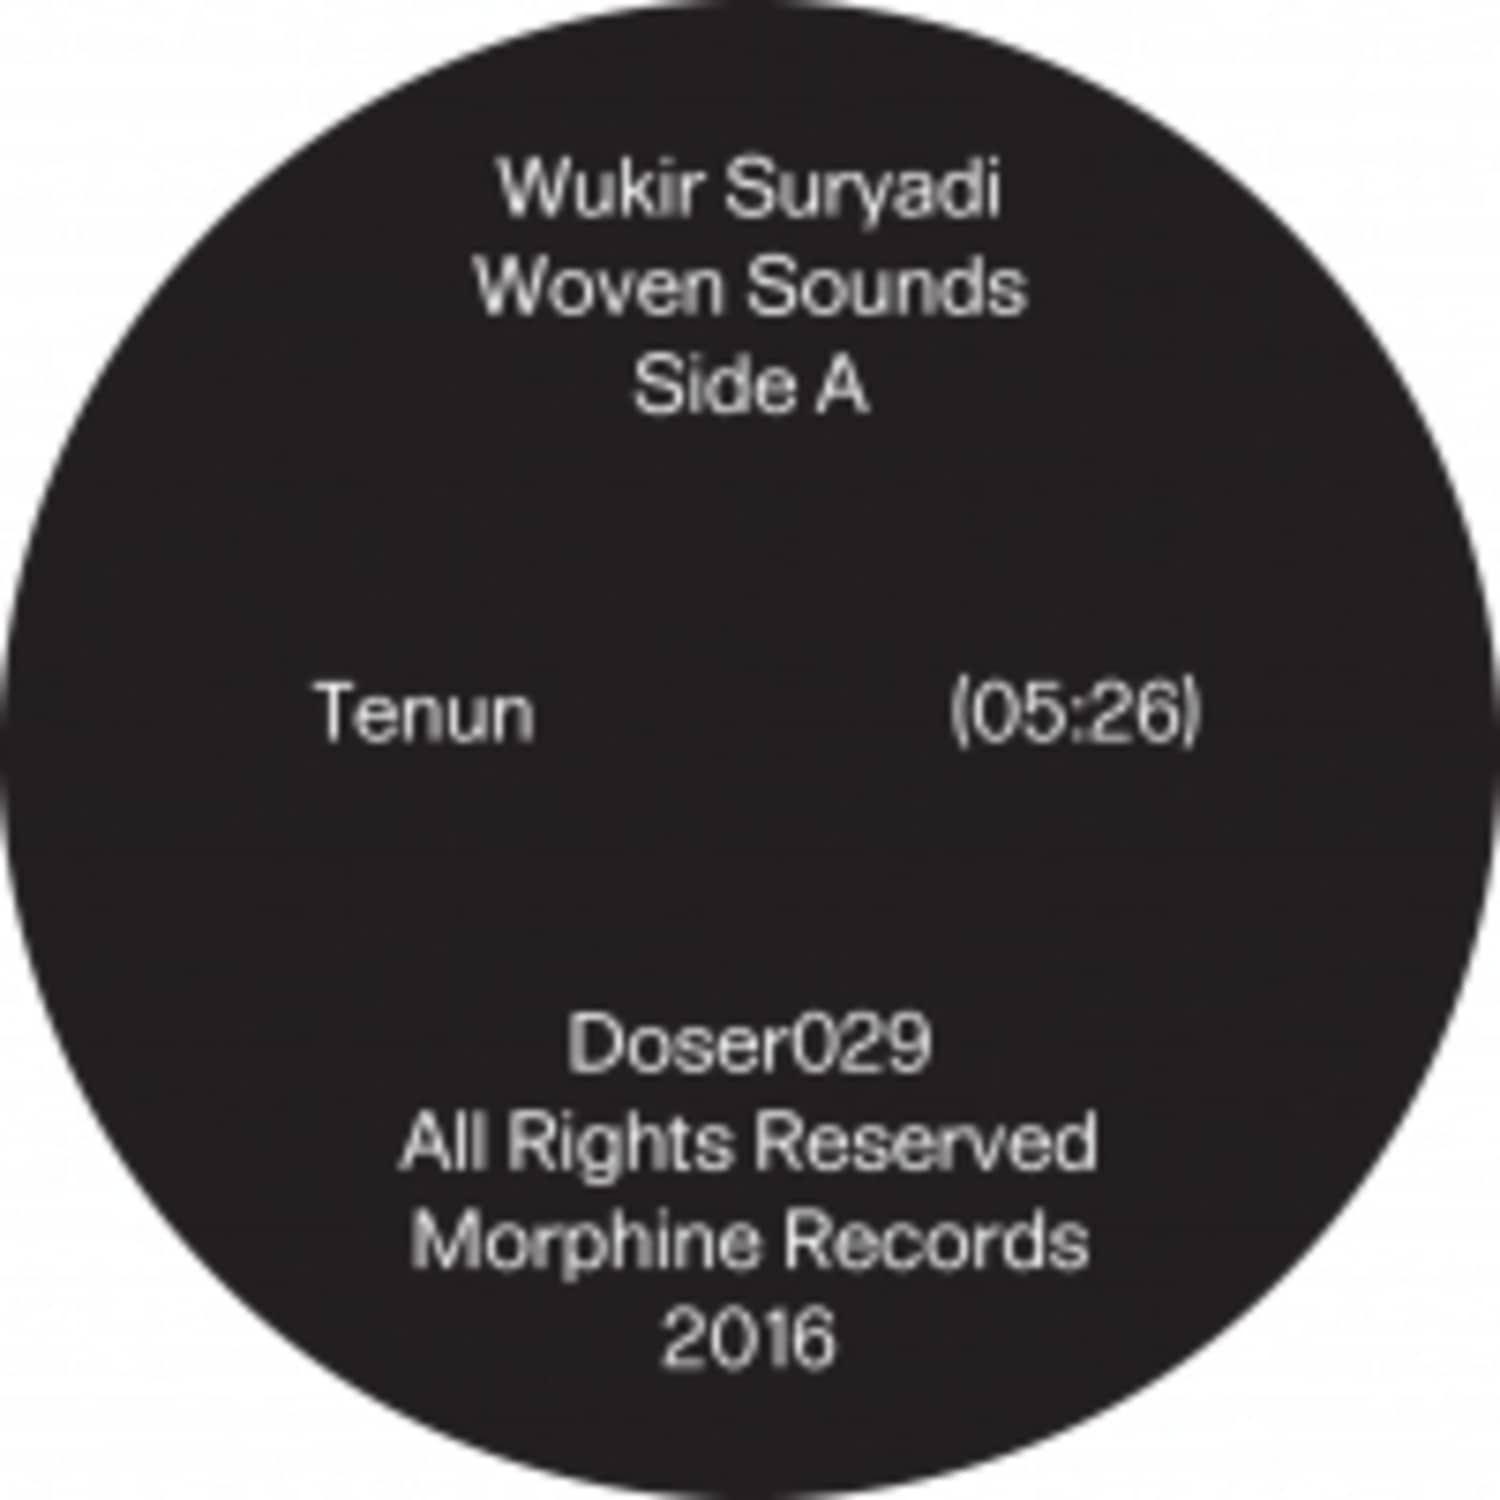 Wukir Suryadi - WOVEN SOUNDS 